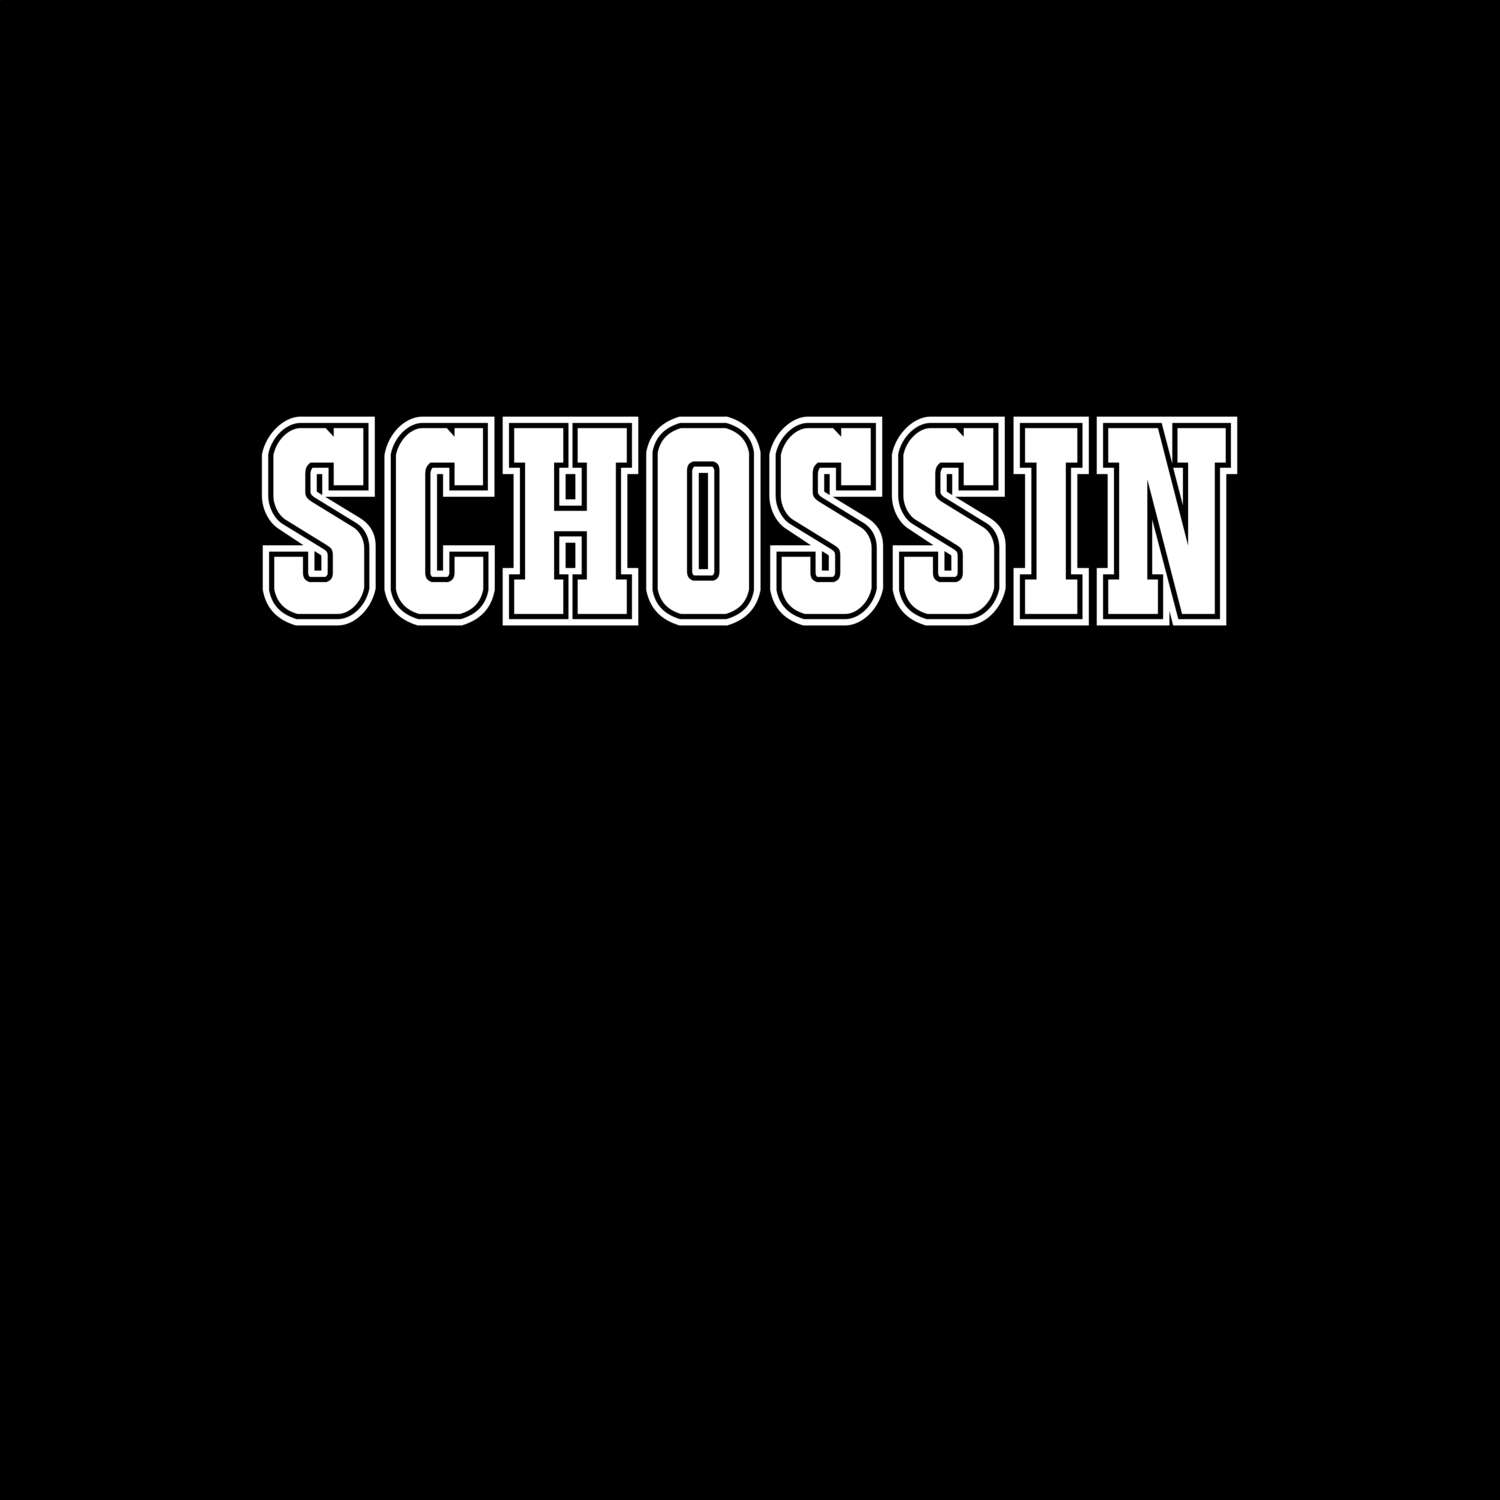 Schossin T-Shirt »Classic«